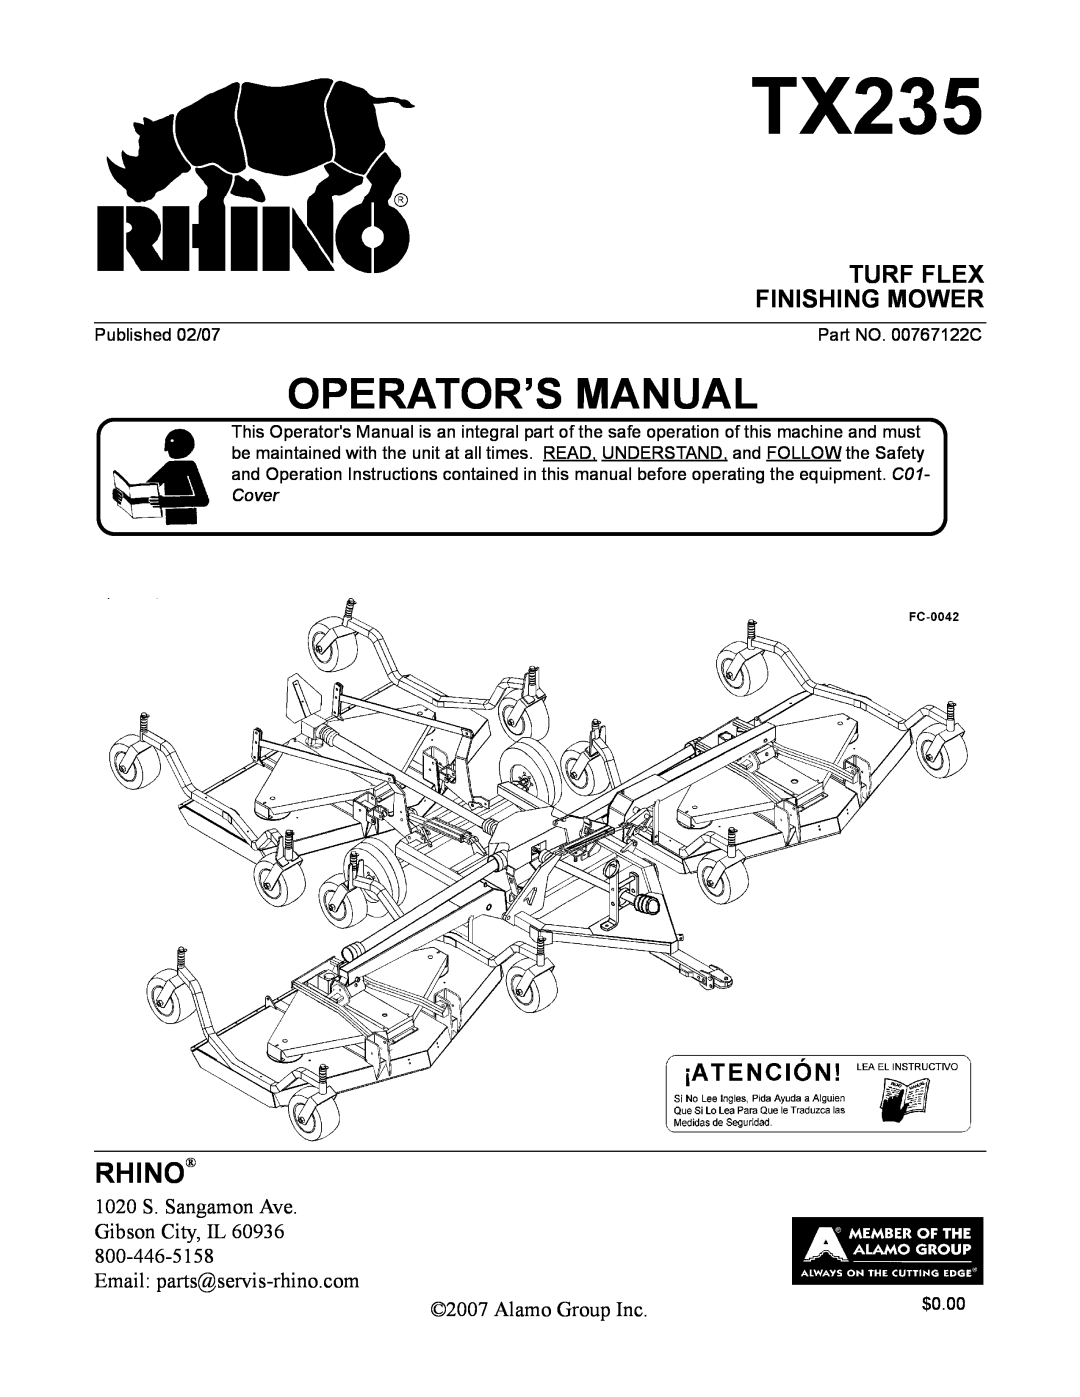 Alamo TX235 manual Rhino, Turf Flex, Operator’S Manual, Finishing Mower 